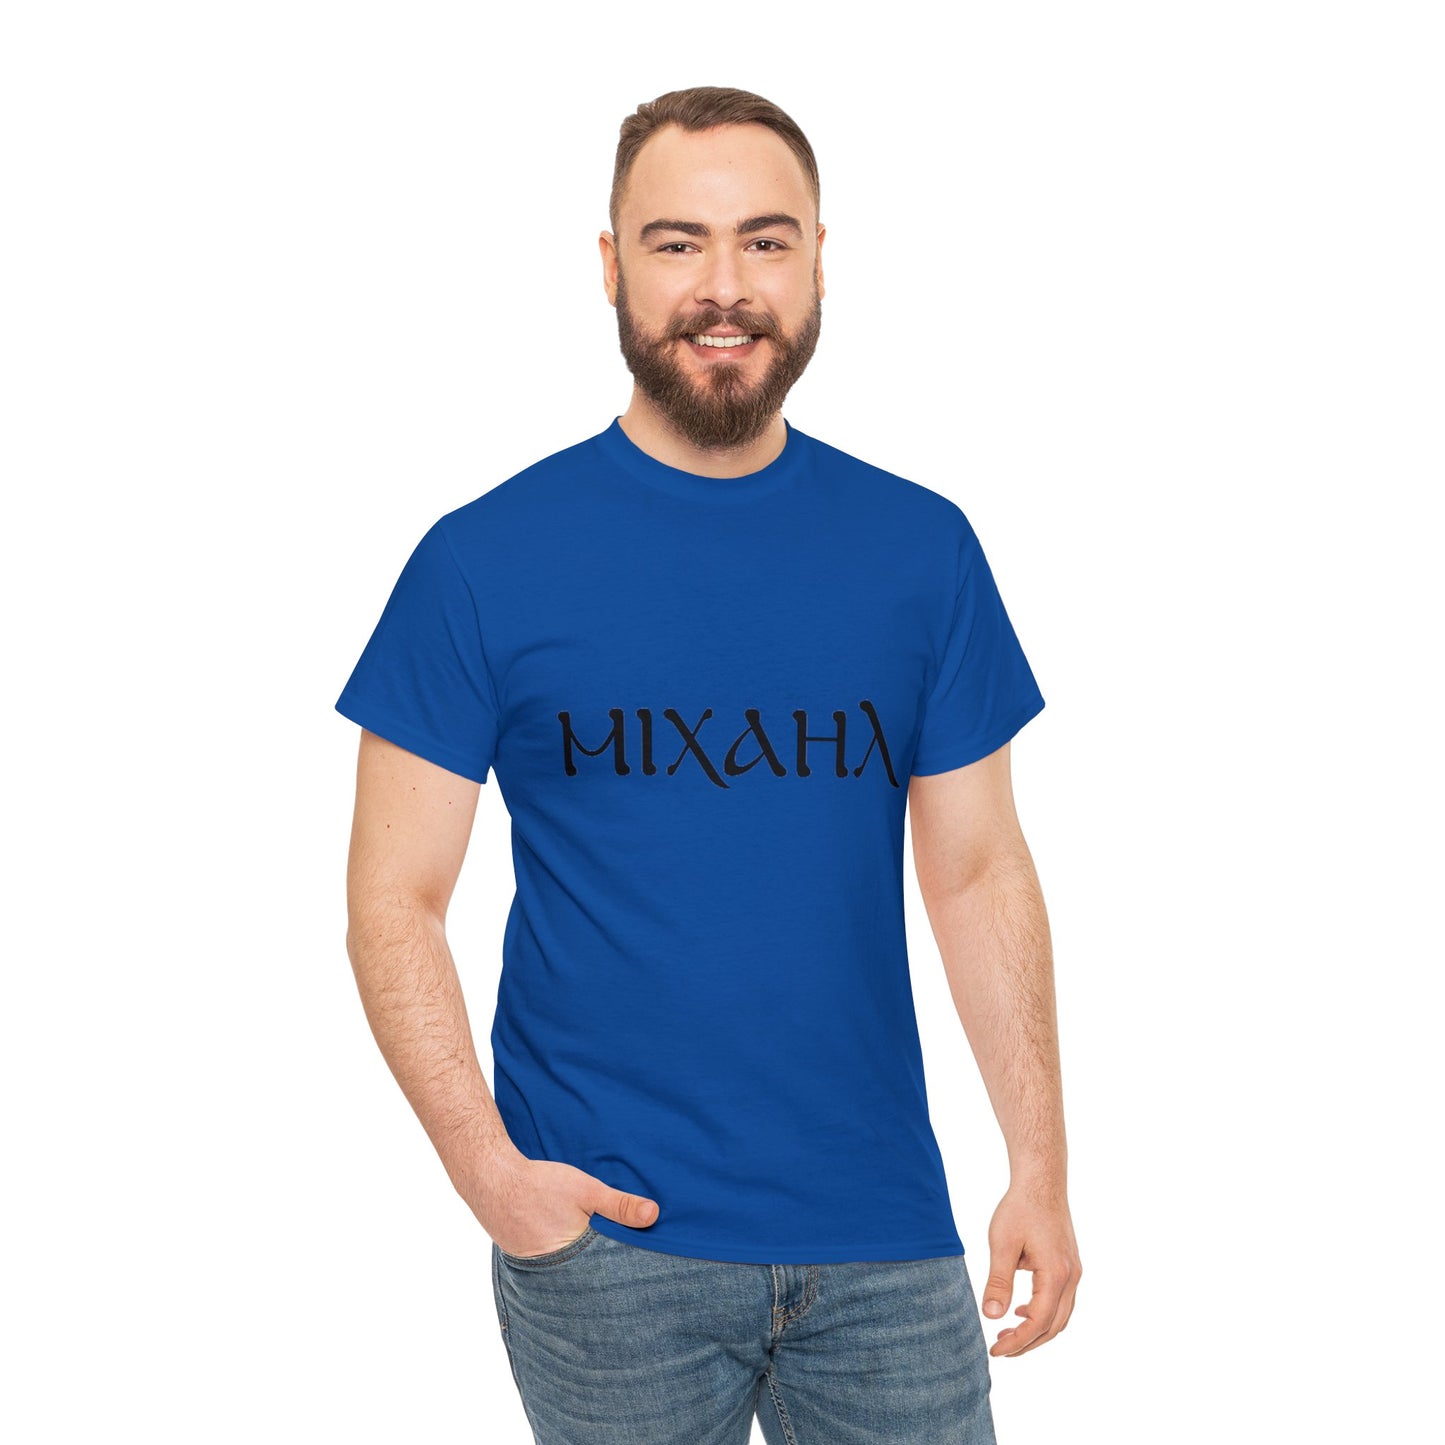 "Michael" T-shirt